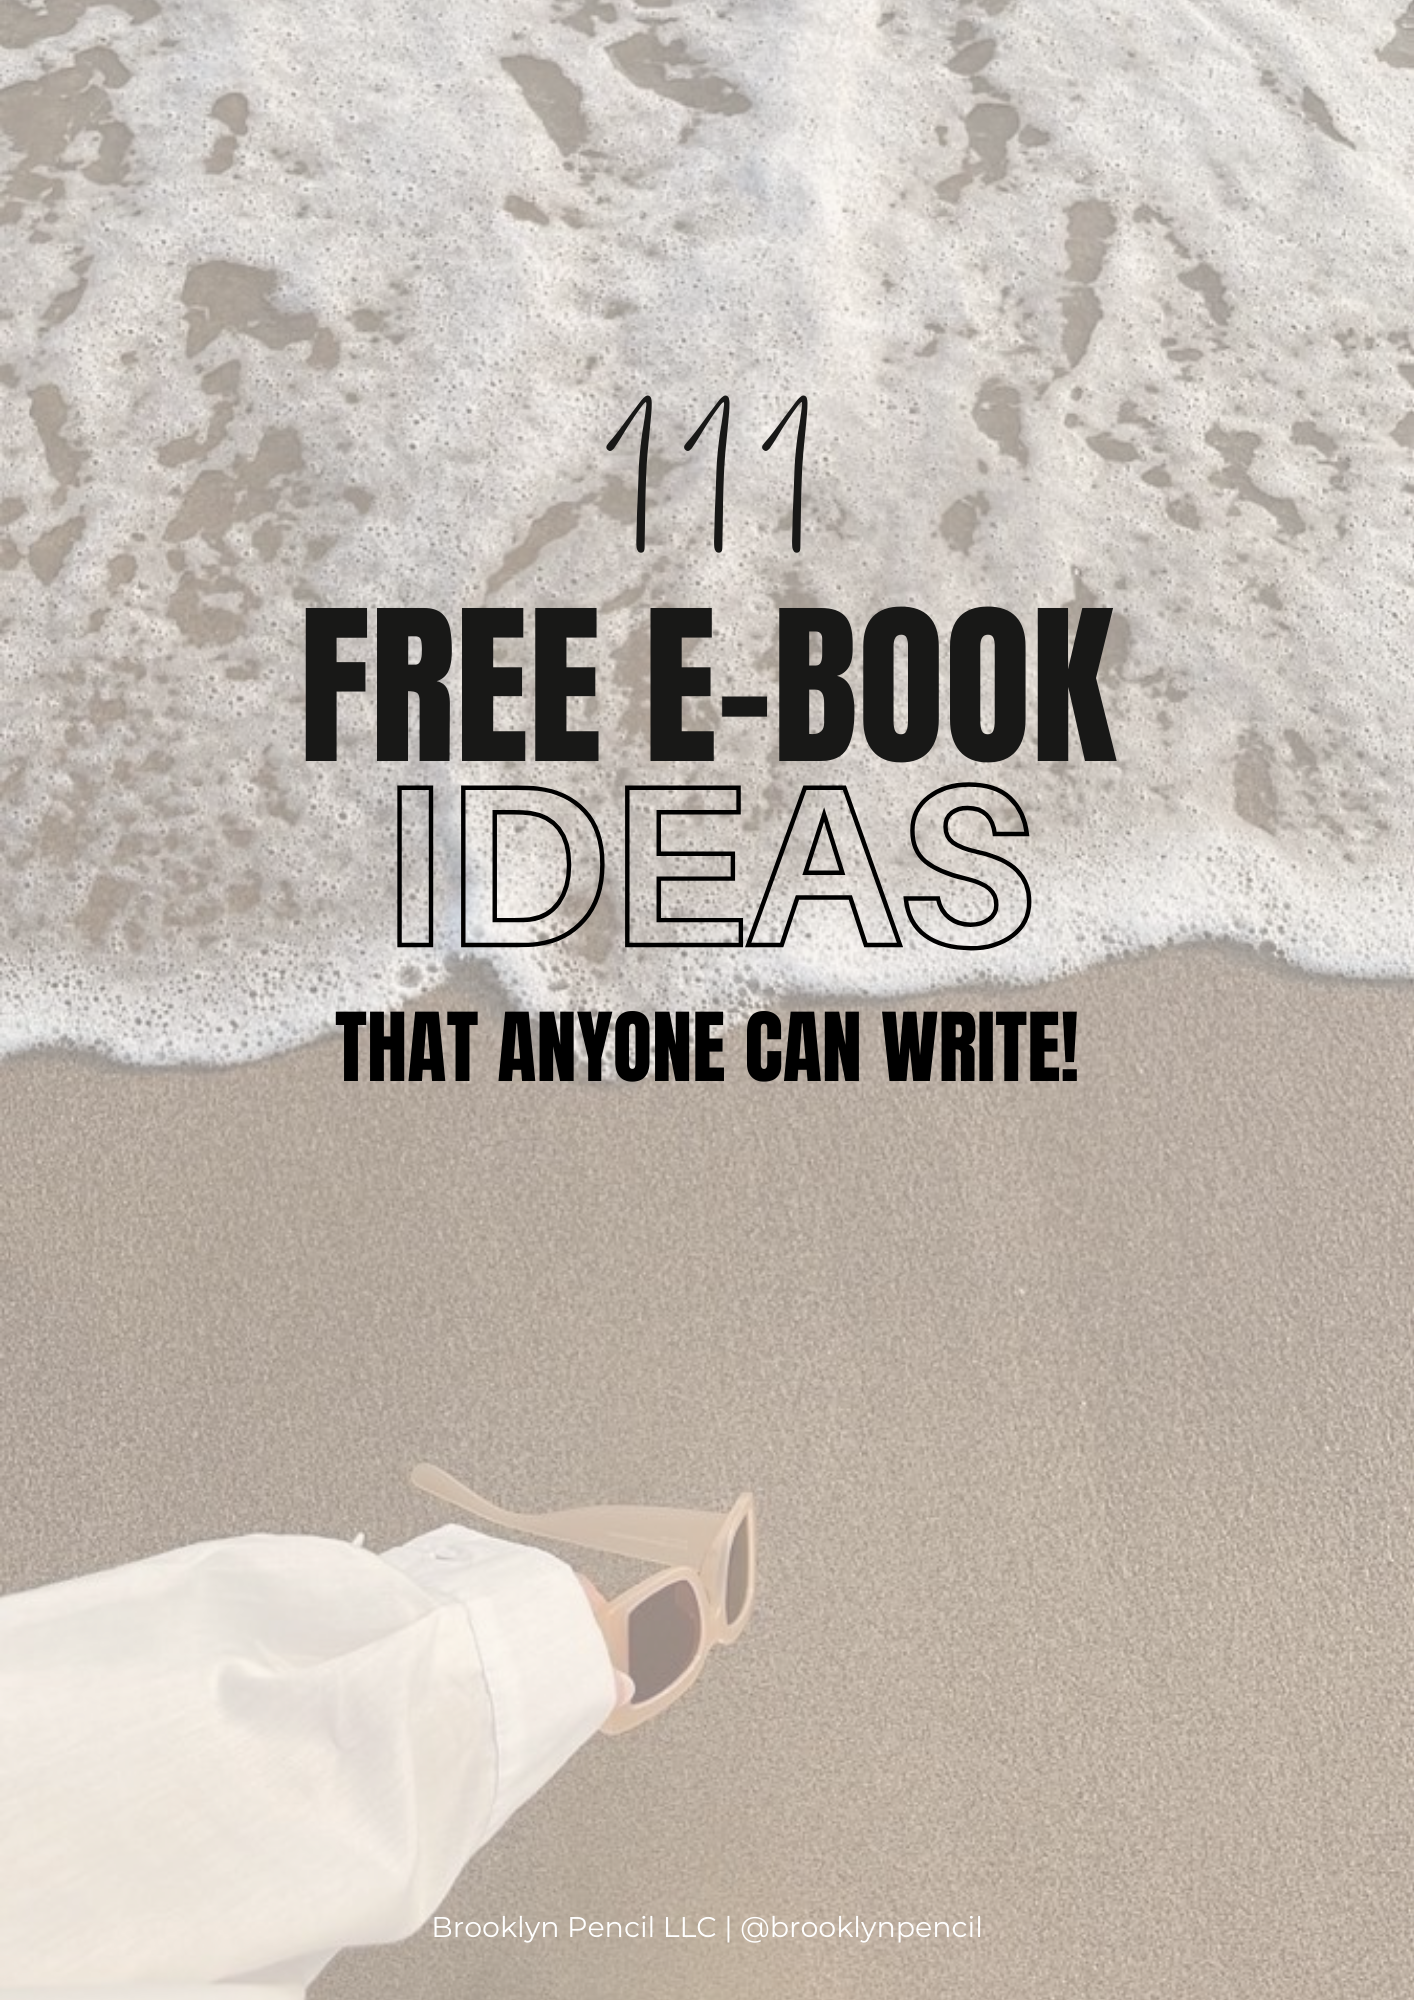 111 e-Book Ideas ANYONE can write FOR FREE